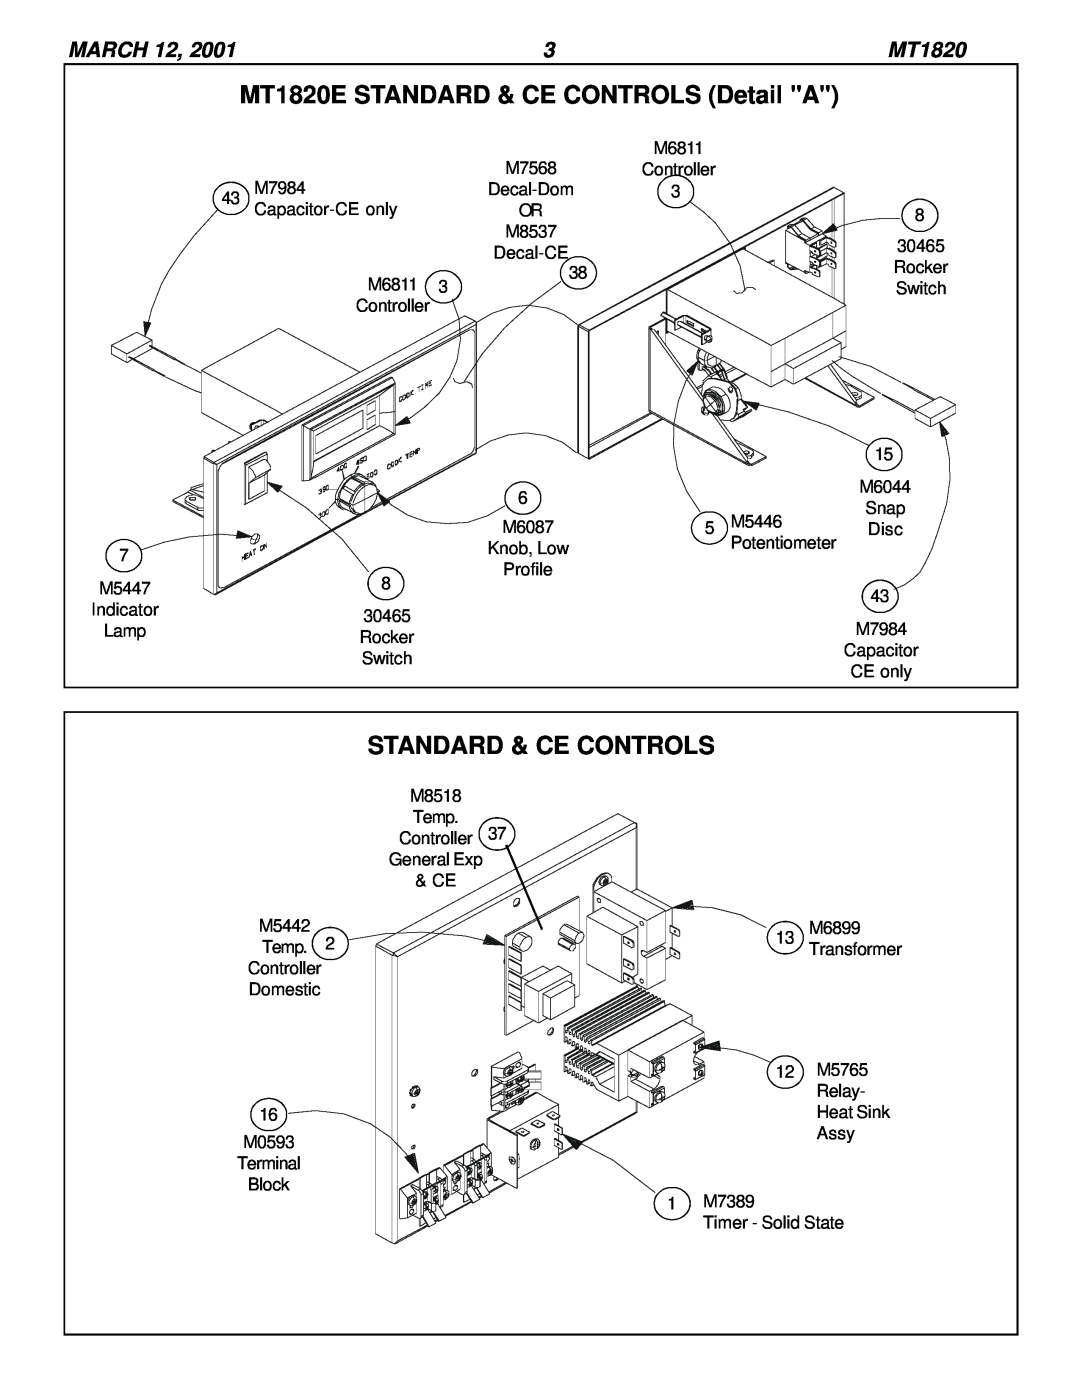 Blodgett manual MT1820E STANDARD & CE CONTROLS Detail A, Standard & Ce Controls, March 